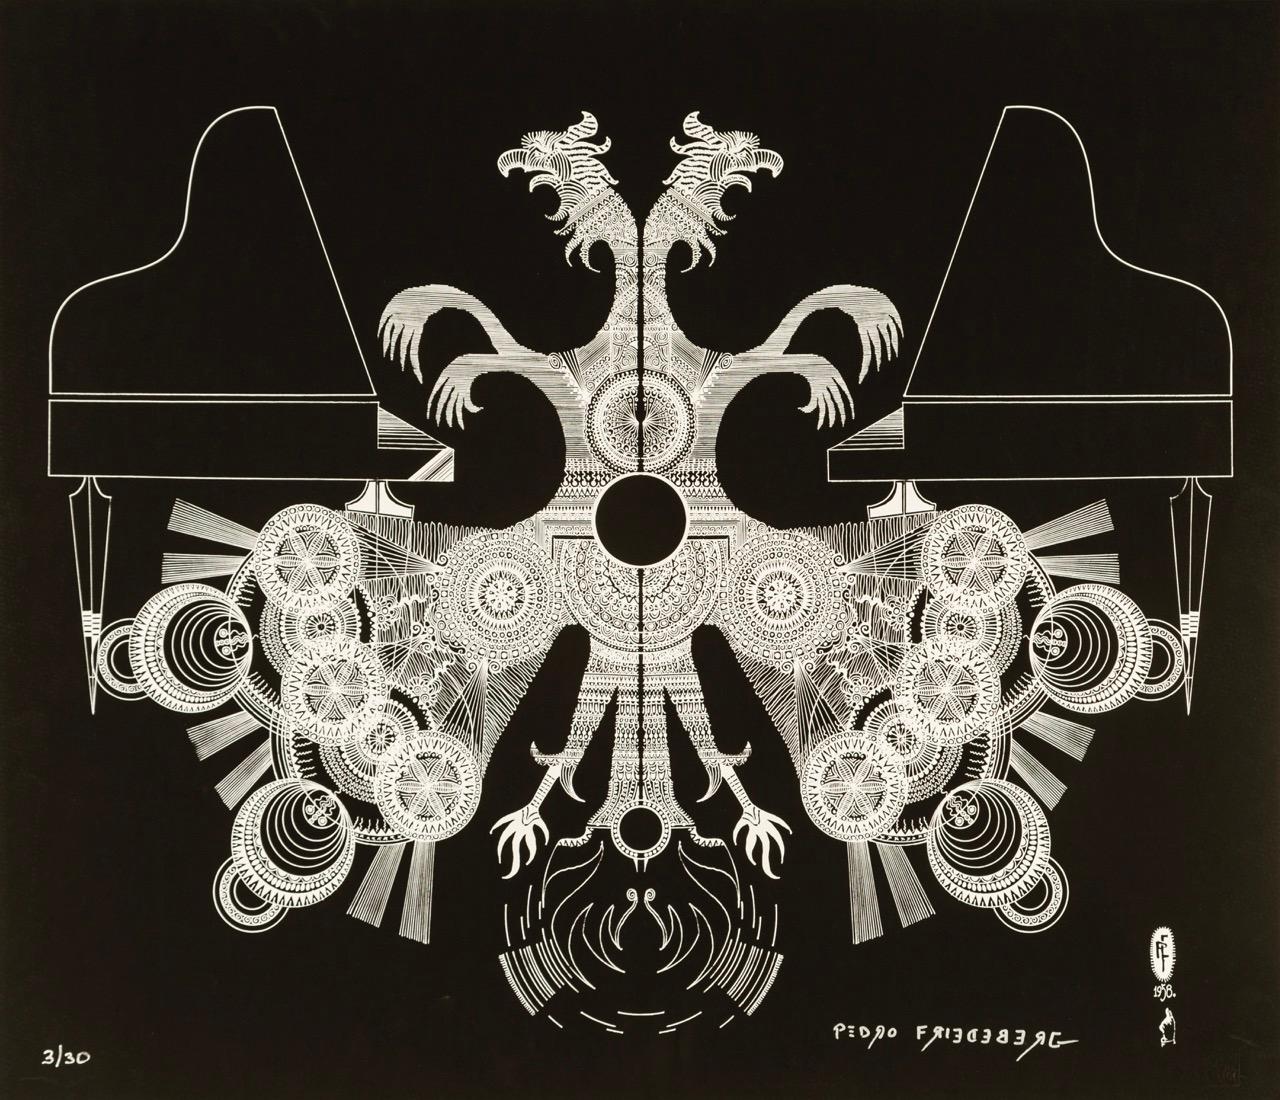 Pedro Friedeberg Figurative Print - "Dragones musicales I" contemporary surrealist dragons piano black and white 